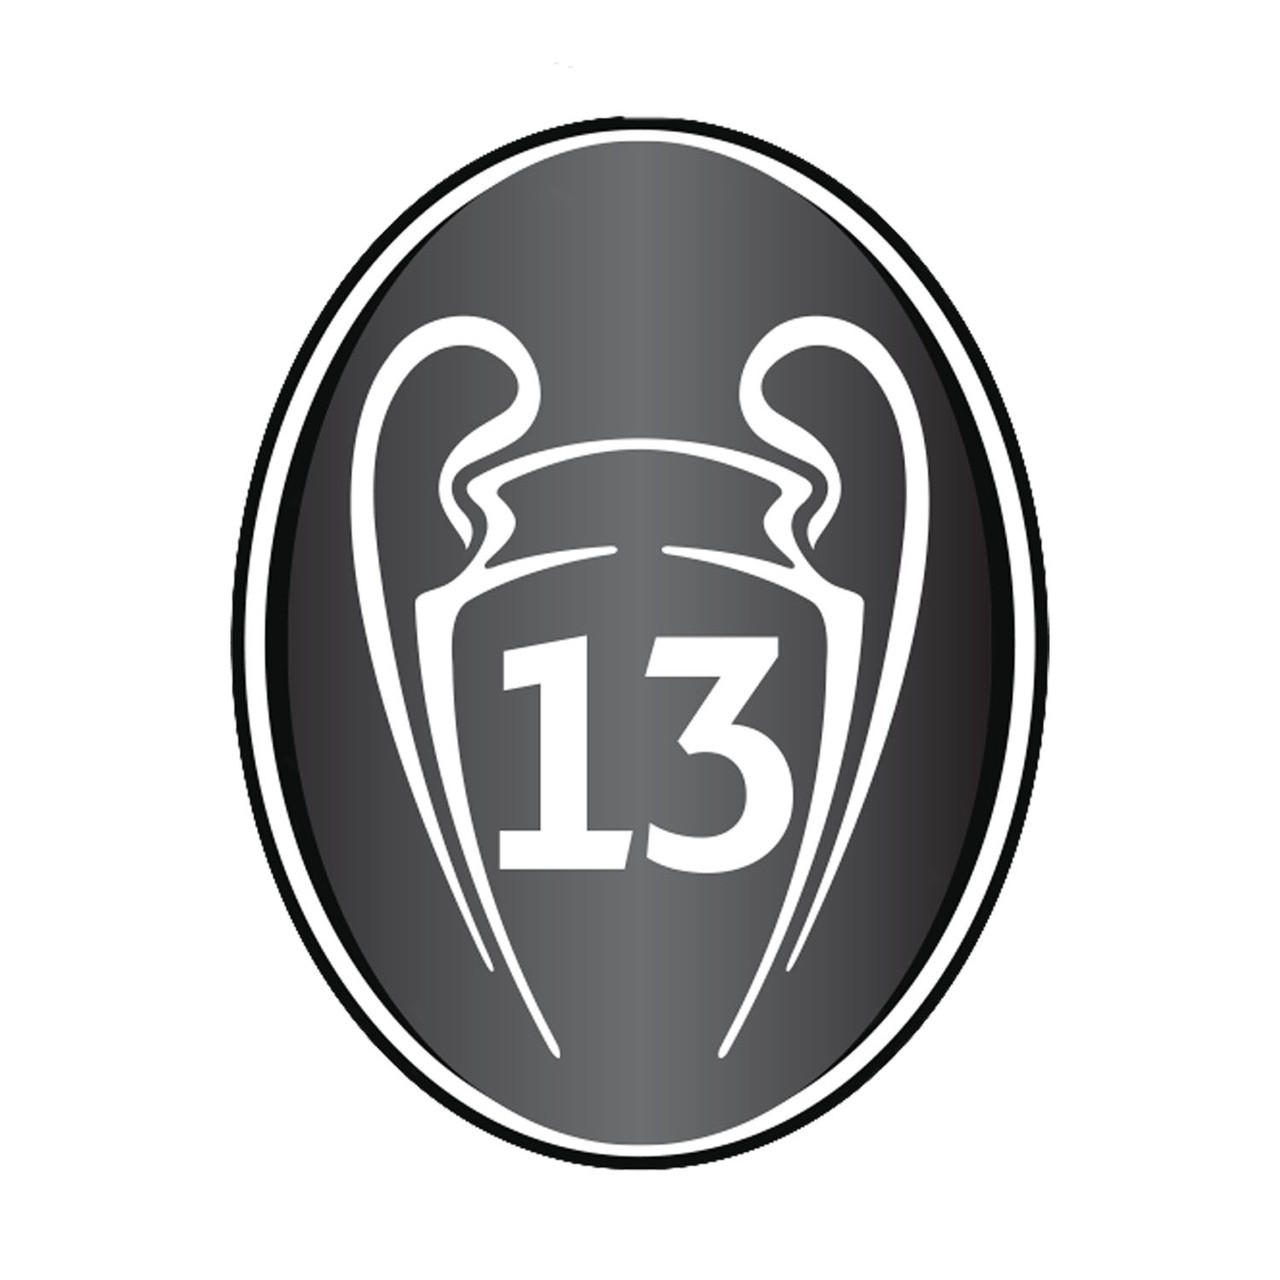 UEFA CHAMPIONS LEAGUE Badge of Honour 13 - Soccer Plus